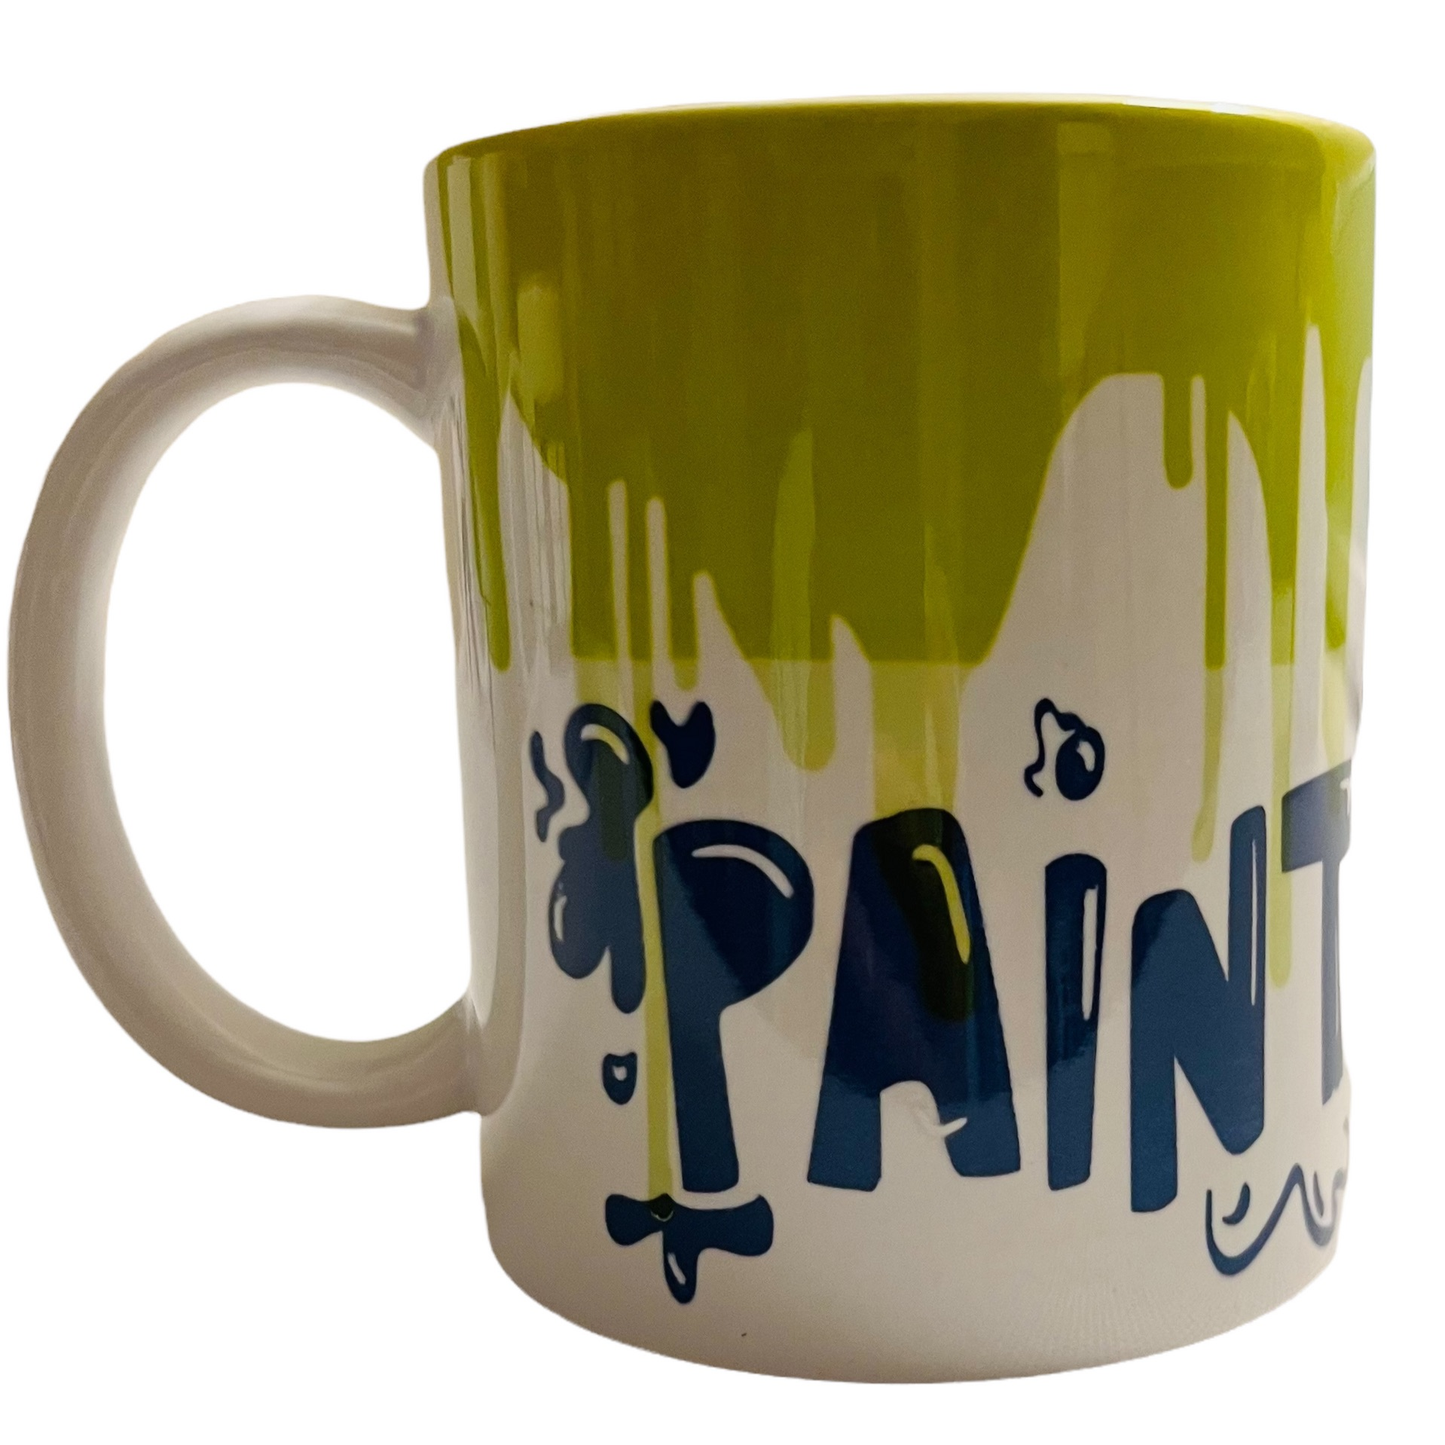 JenDore " Paint Your Own Future " Coffee Tea Mug